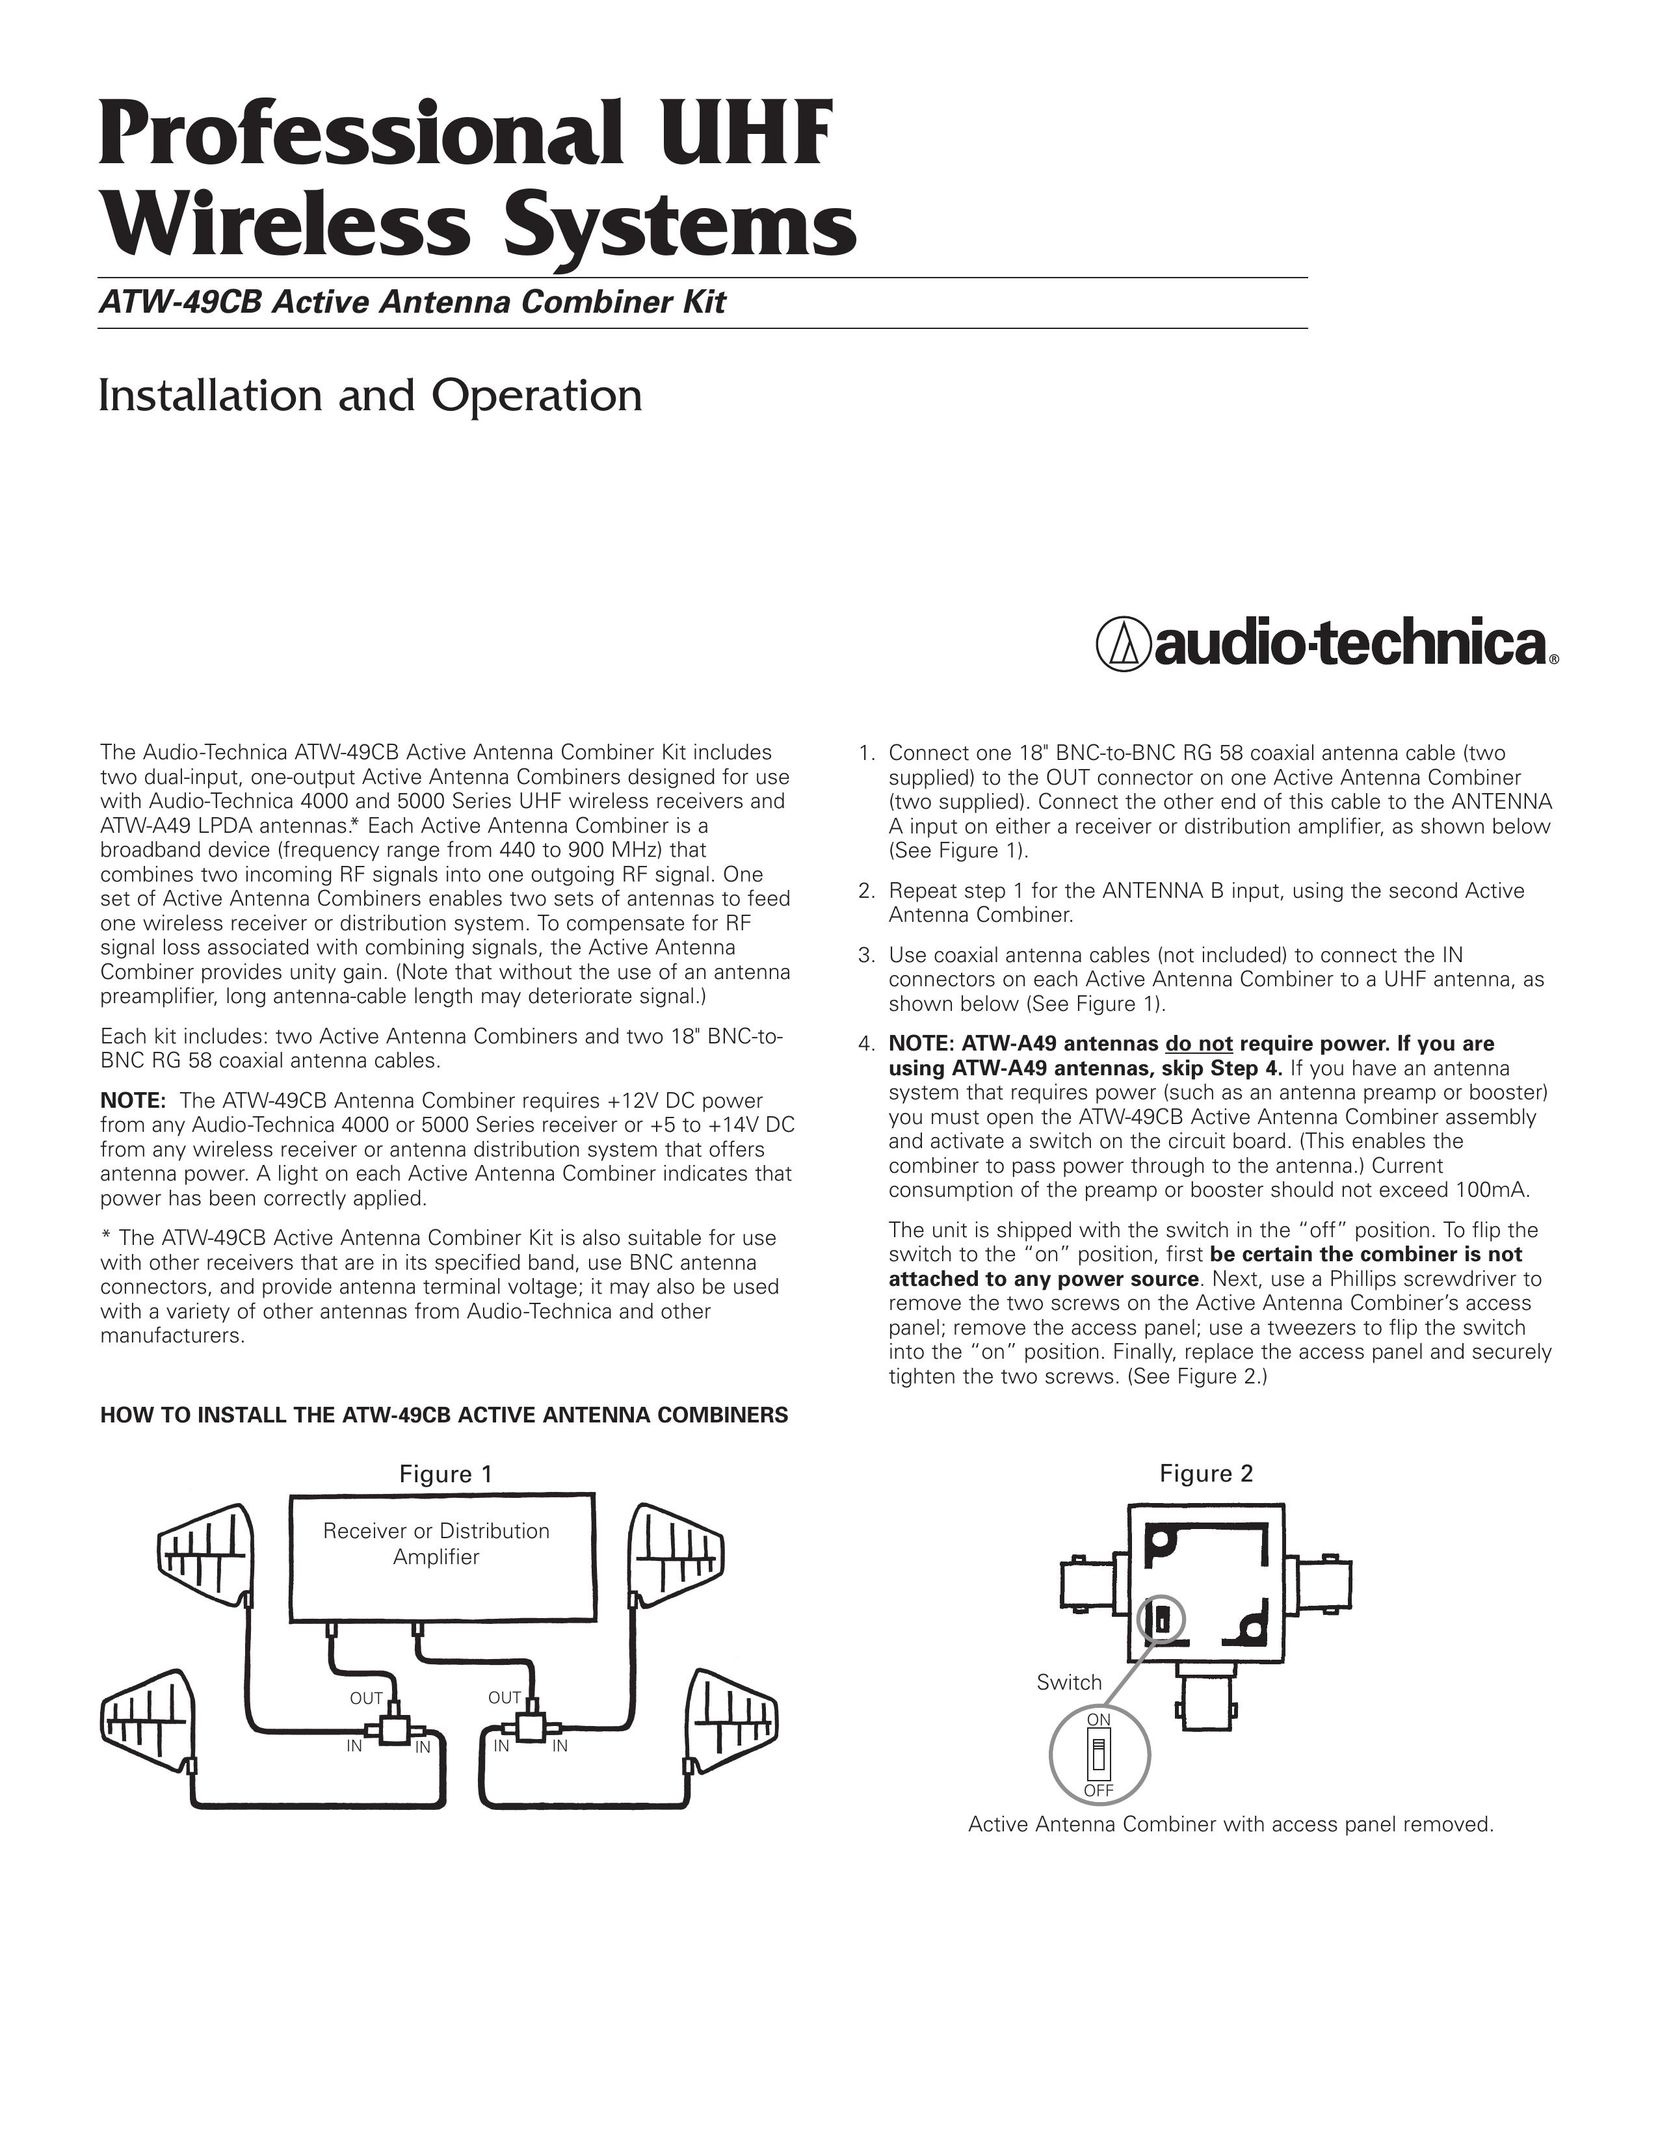 Audio-Technica ATW-49CB Wireless Office Headset User Manual